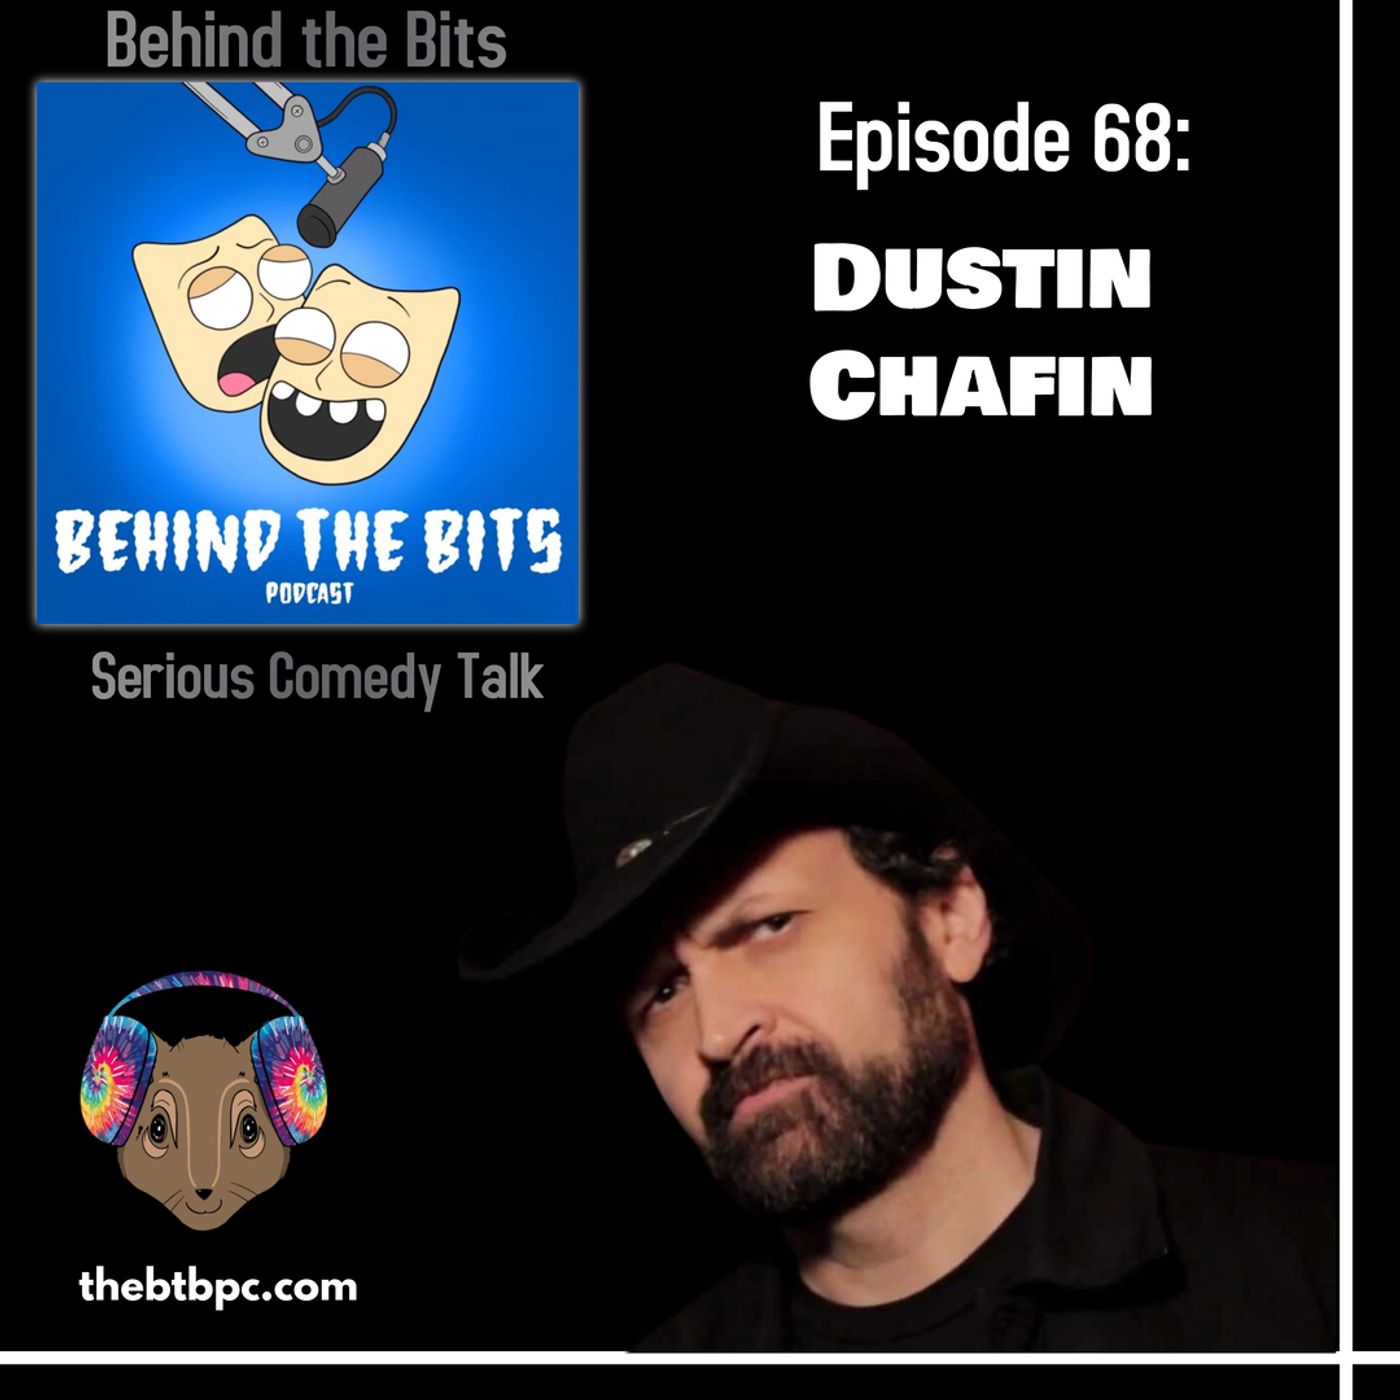 Episode 68: Dustin Chafin